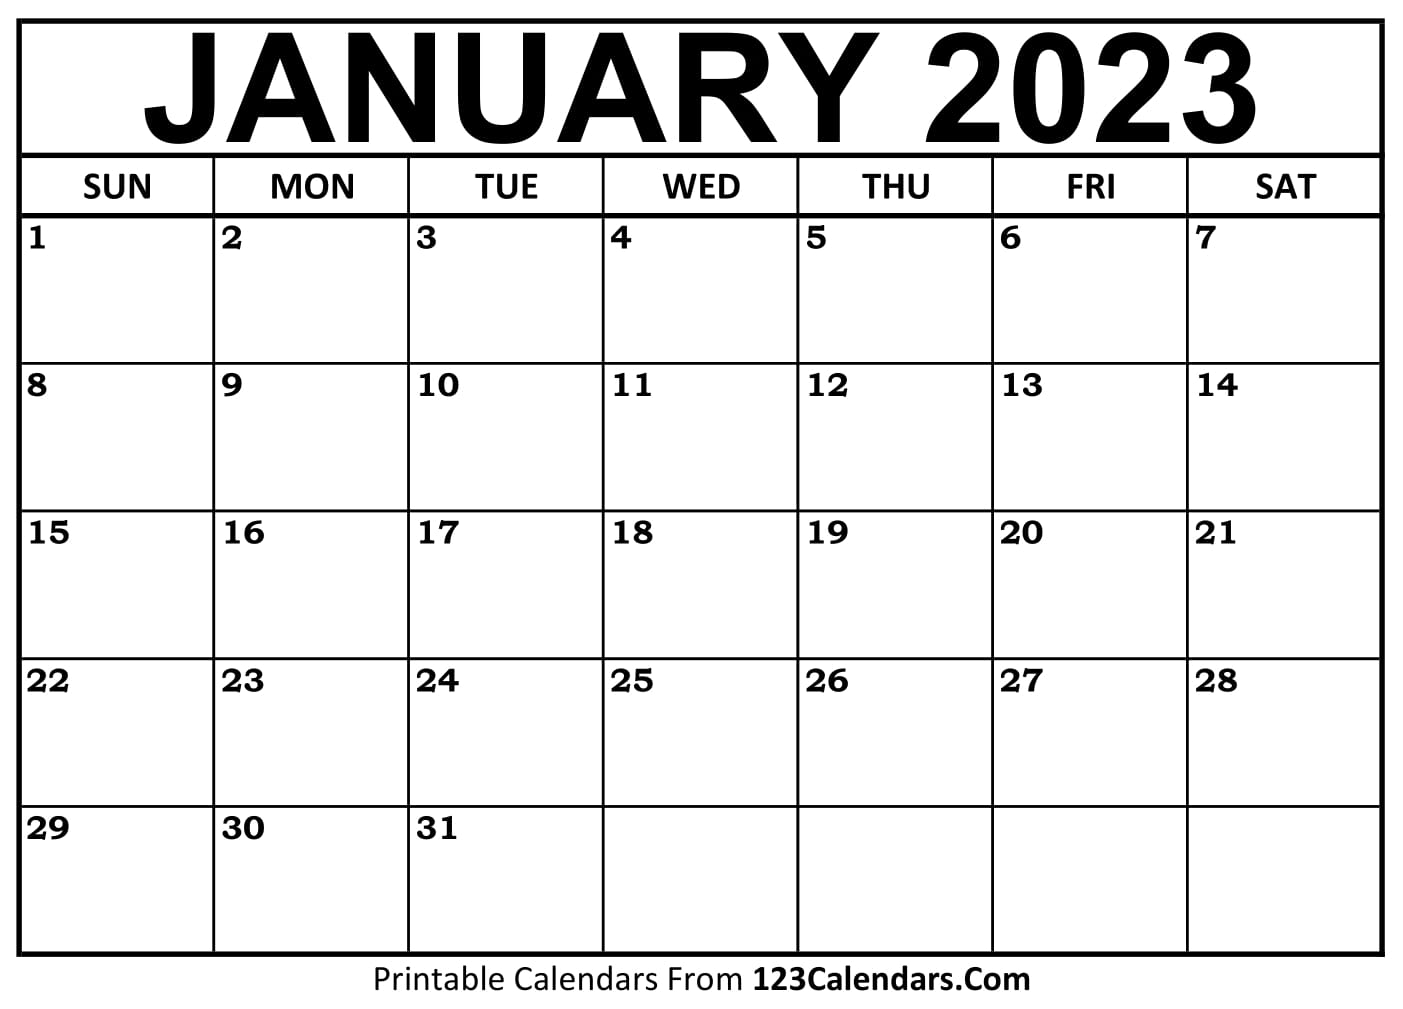 December 2022 January 2023 Calendar Diary 2023 1St January 2023-31St December 2023 Stationery & Office Supplies  Address Books Umoonproductions.com